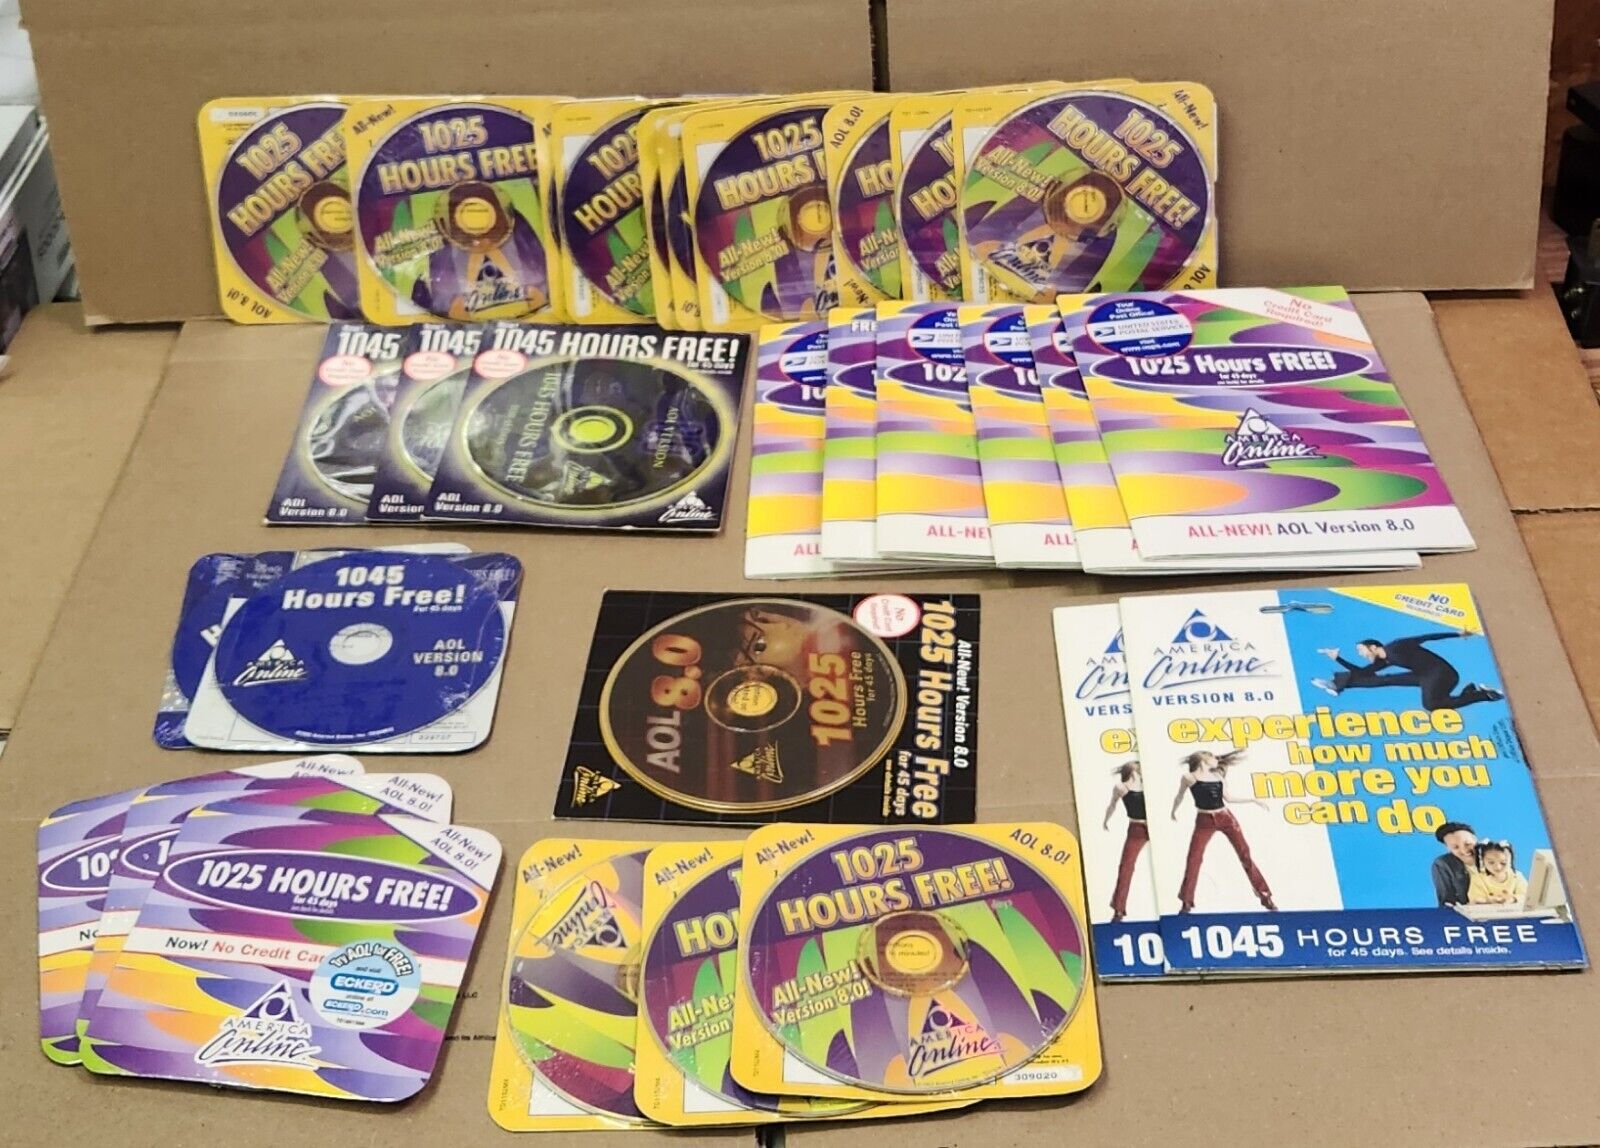 Lot of 30 New Vintage AOL America Online Internet Mail CDs V8.0 - NEW SEALED